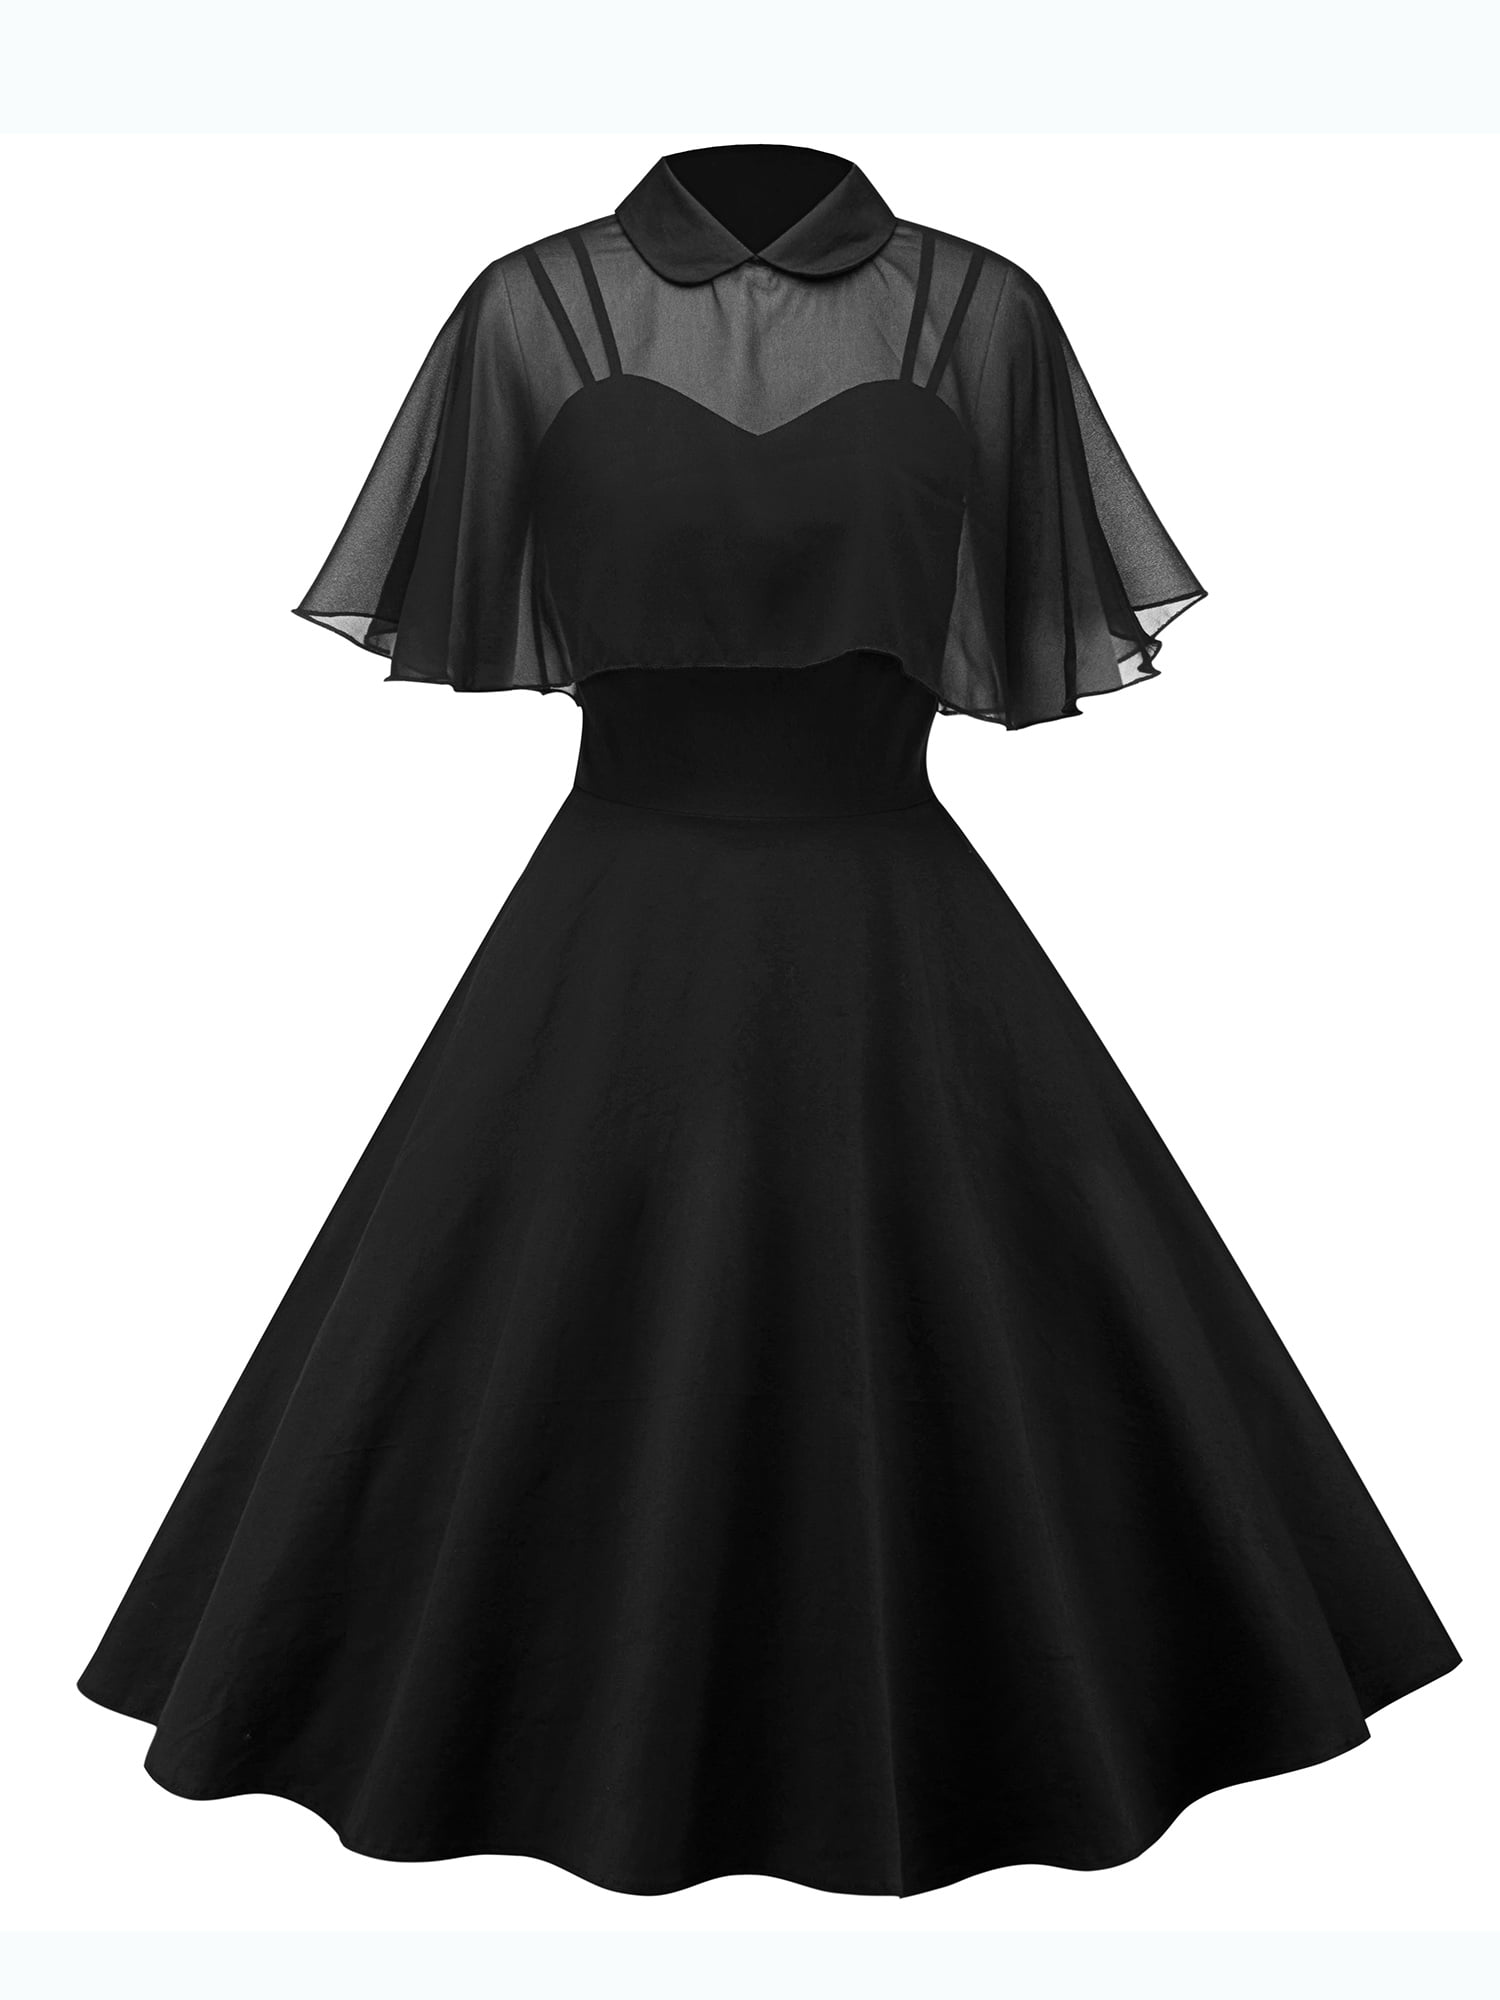 Malbaba Plaid Printed Homecoming 1950s Retro Vintage Sleeveless V-Neck Flared A-Line Dress Elegant for Party 